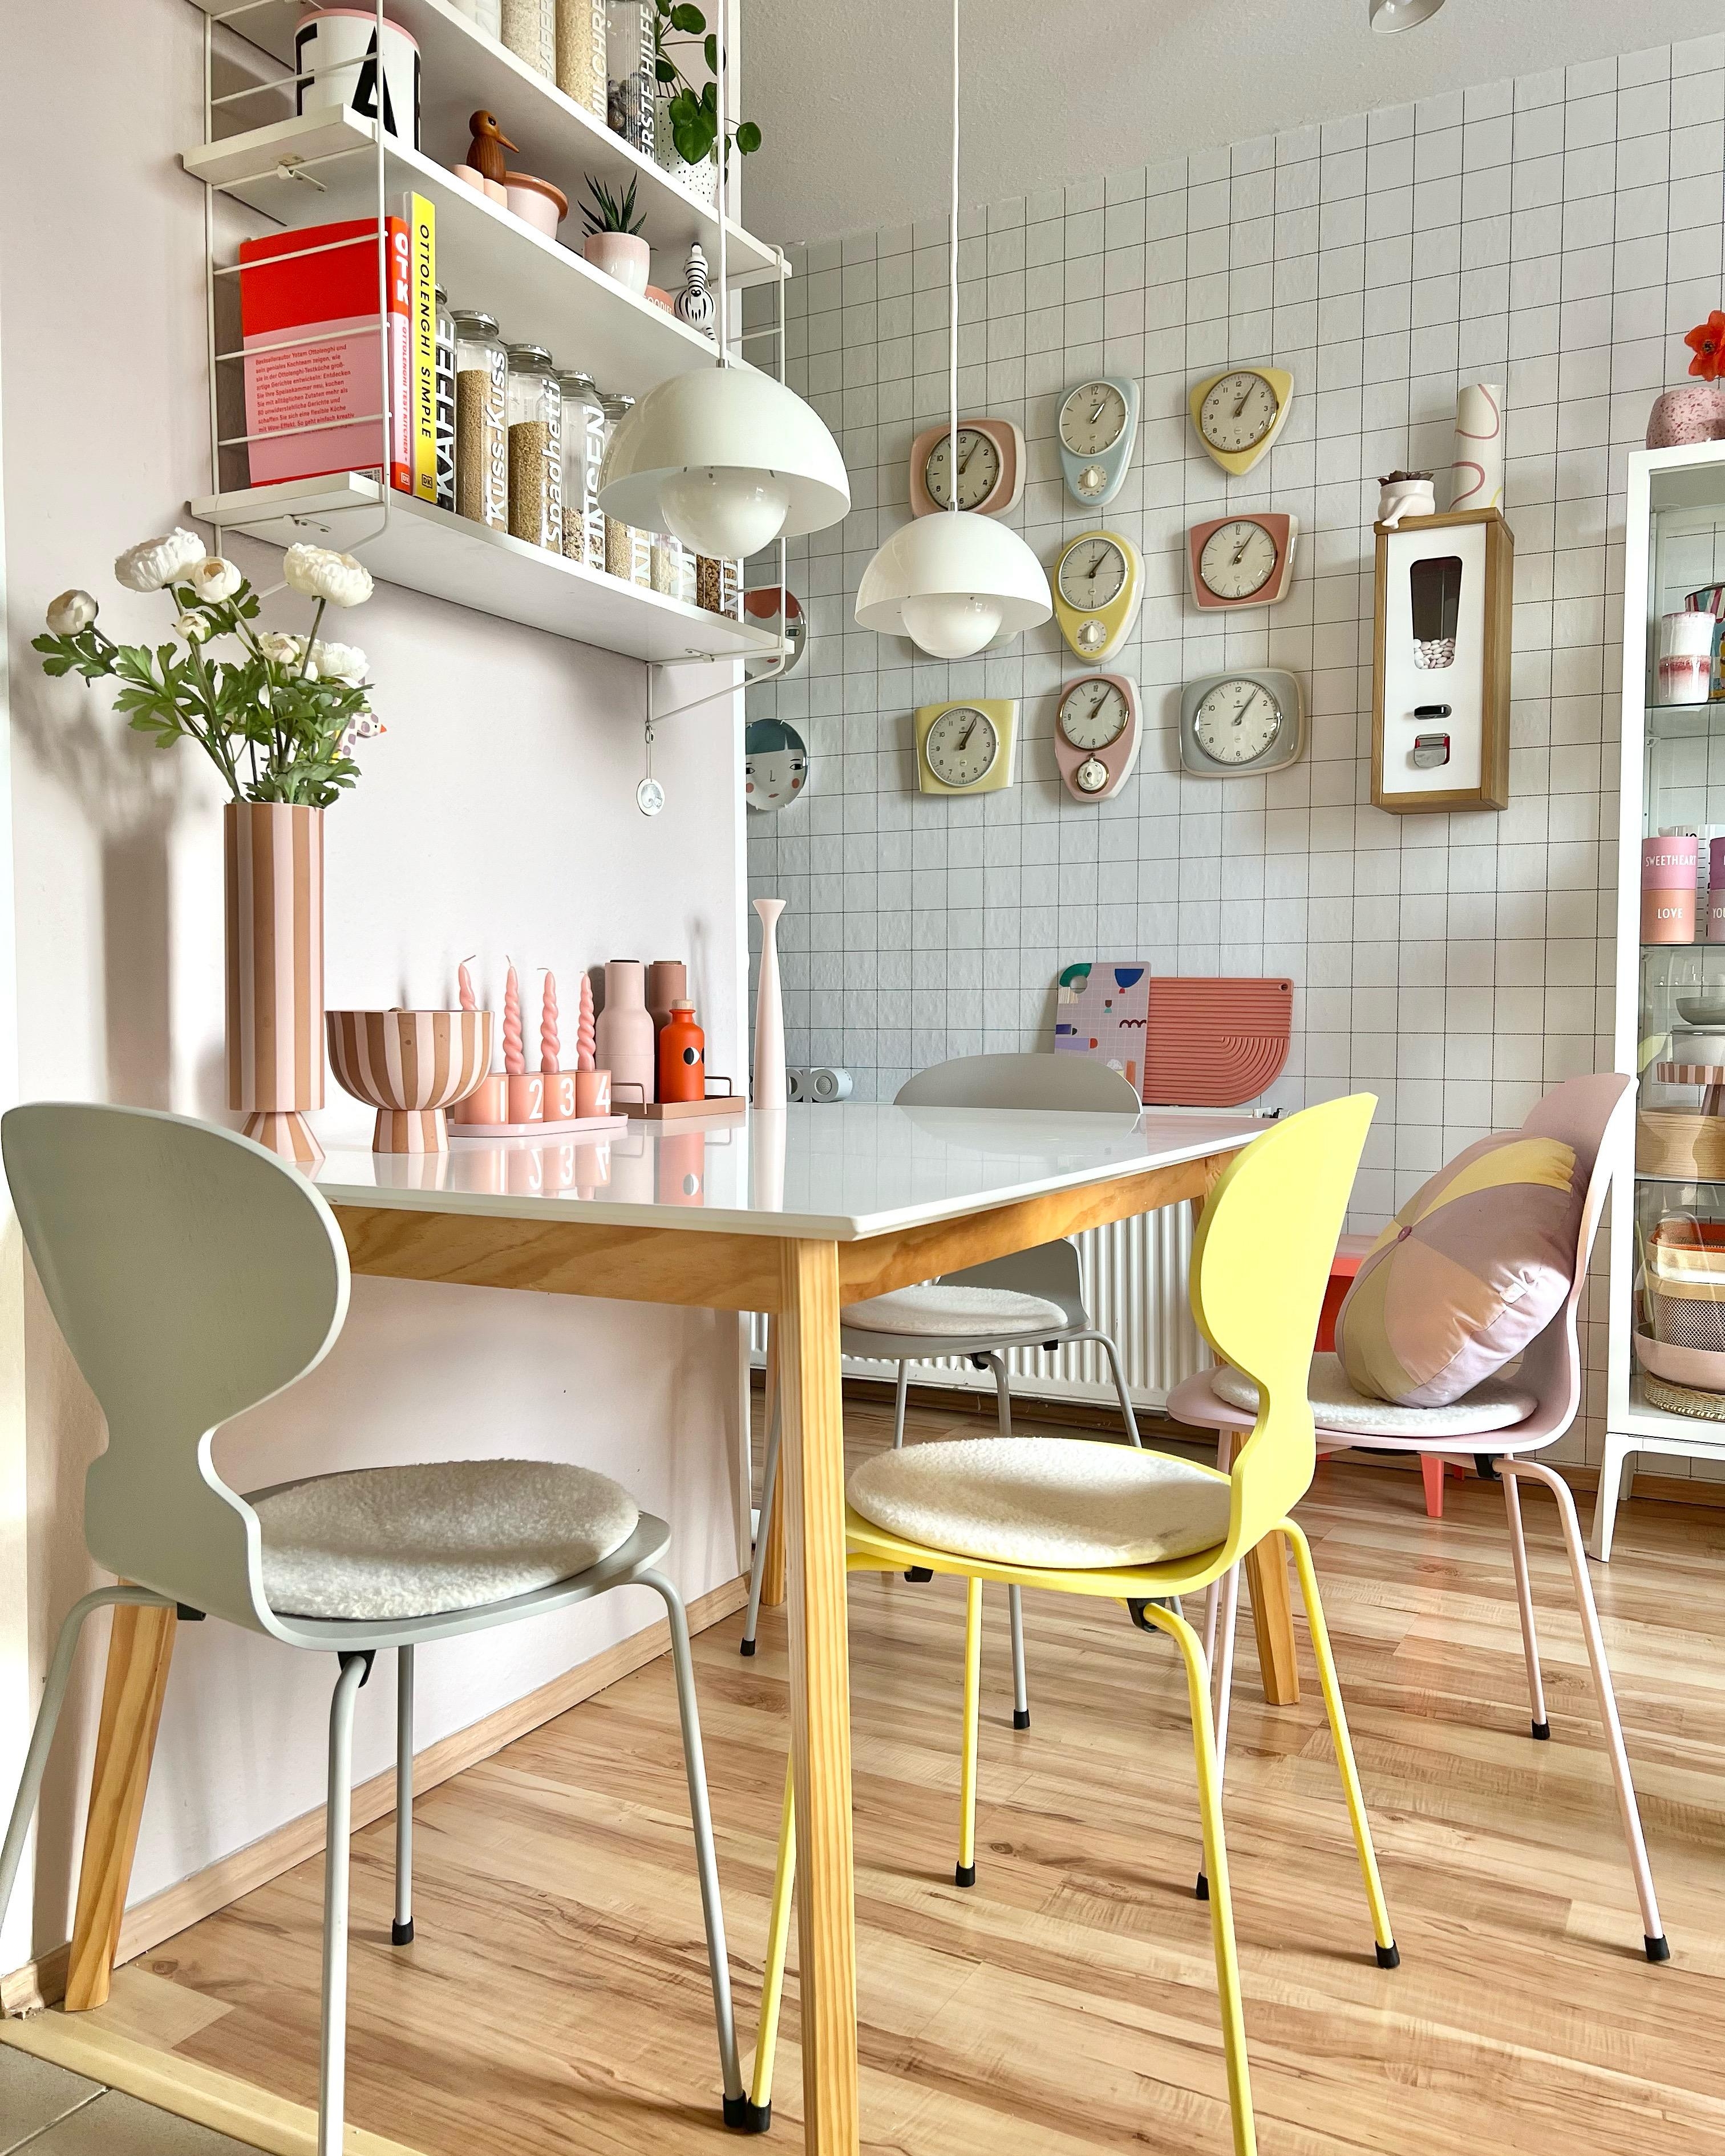 #interior #interiordesign #interiorinspo #couchliebt #kitcheninspo #colourfulkitchen #vintage #pastell #küche #bunt